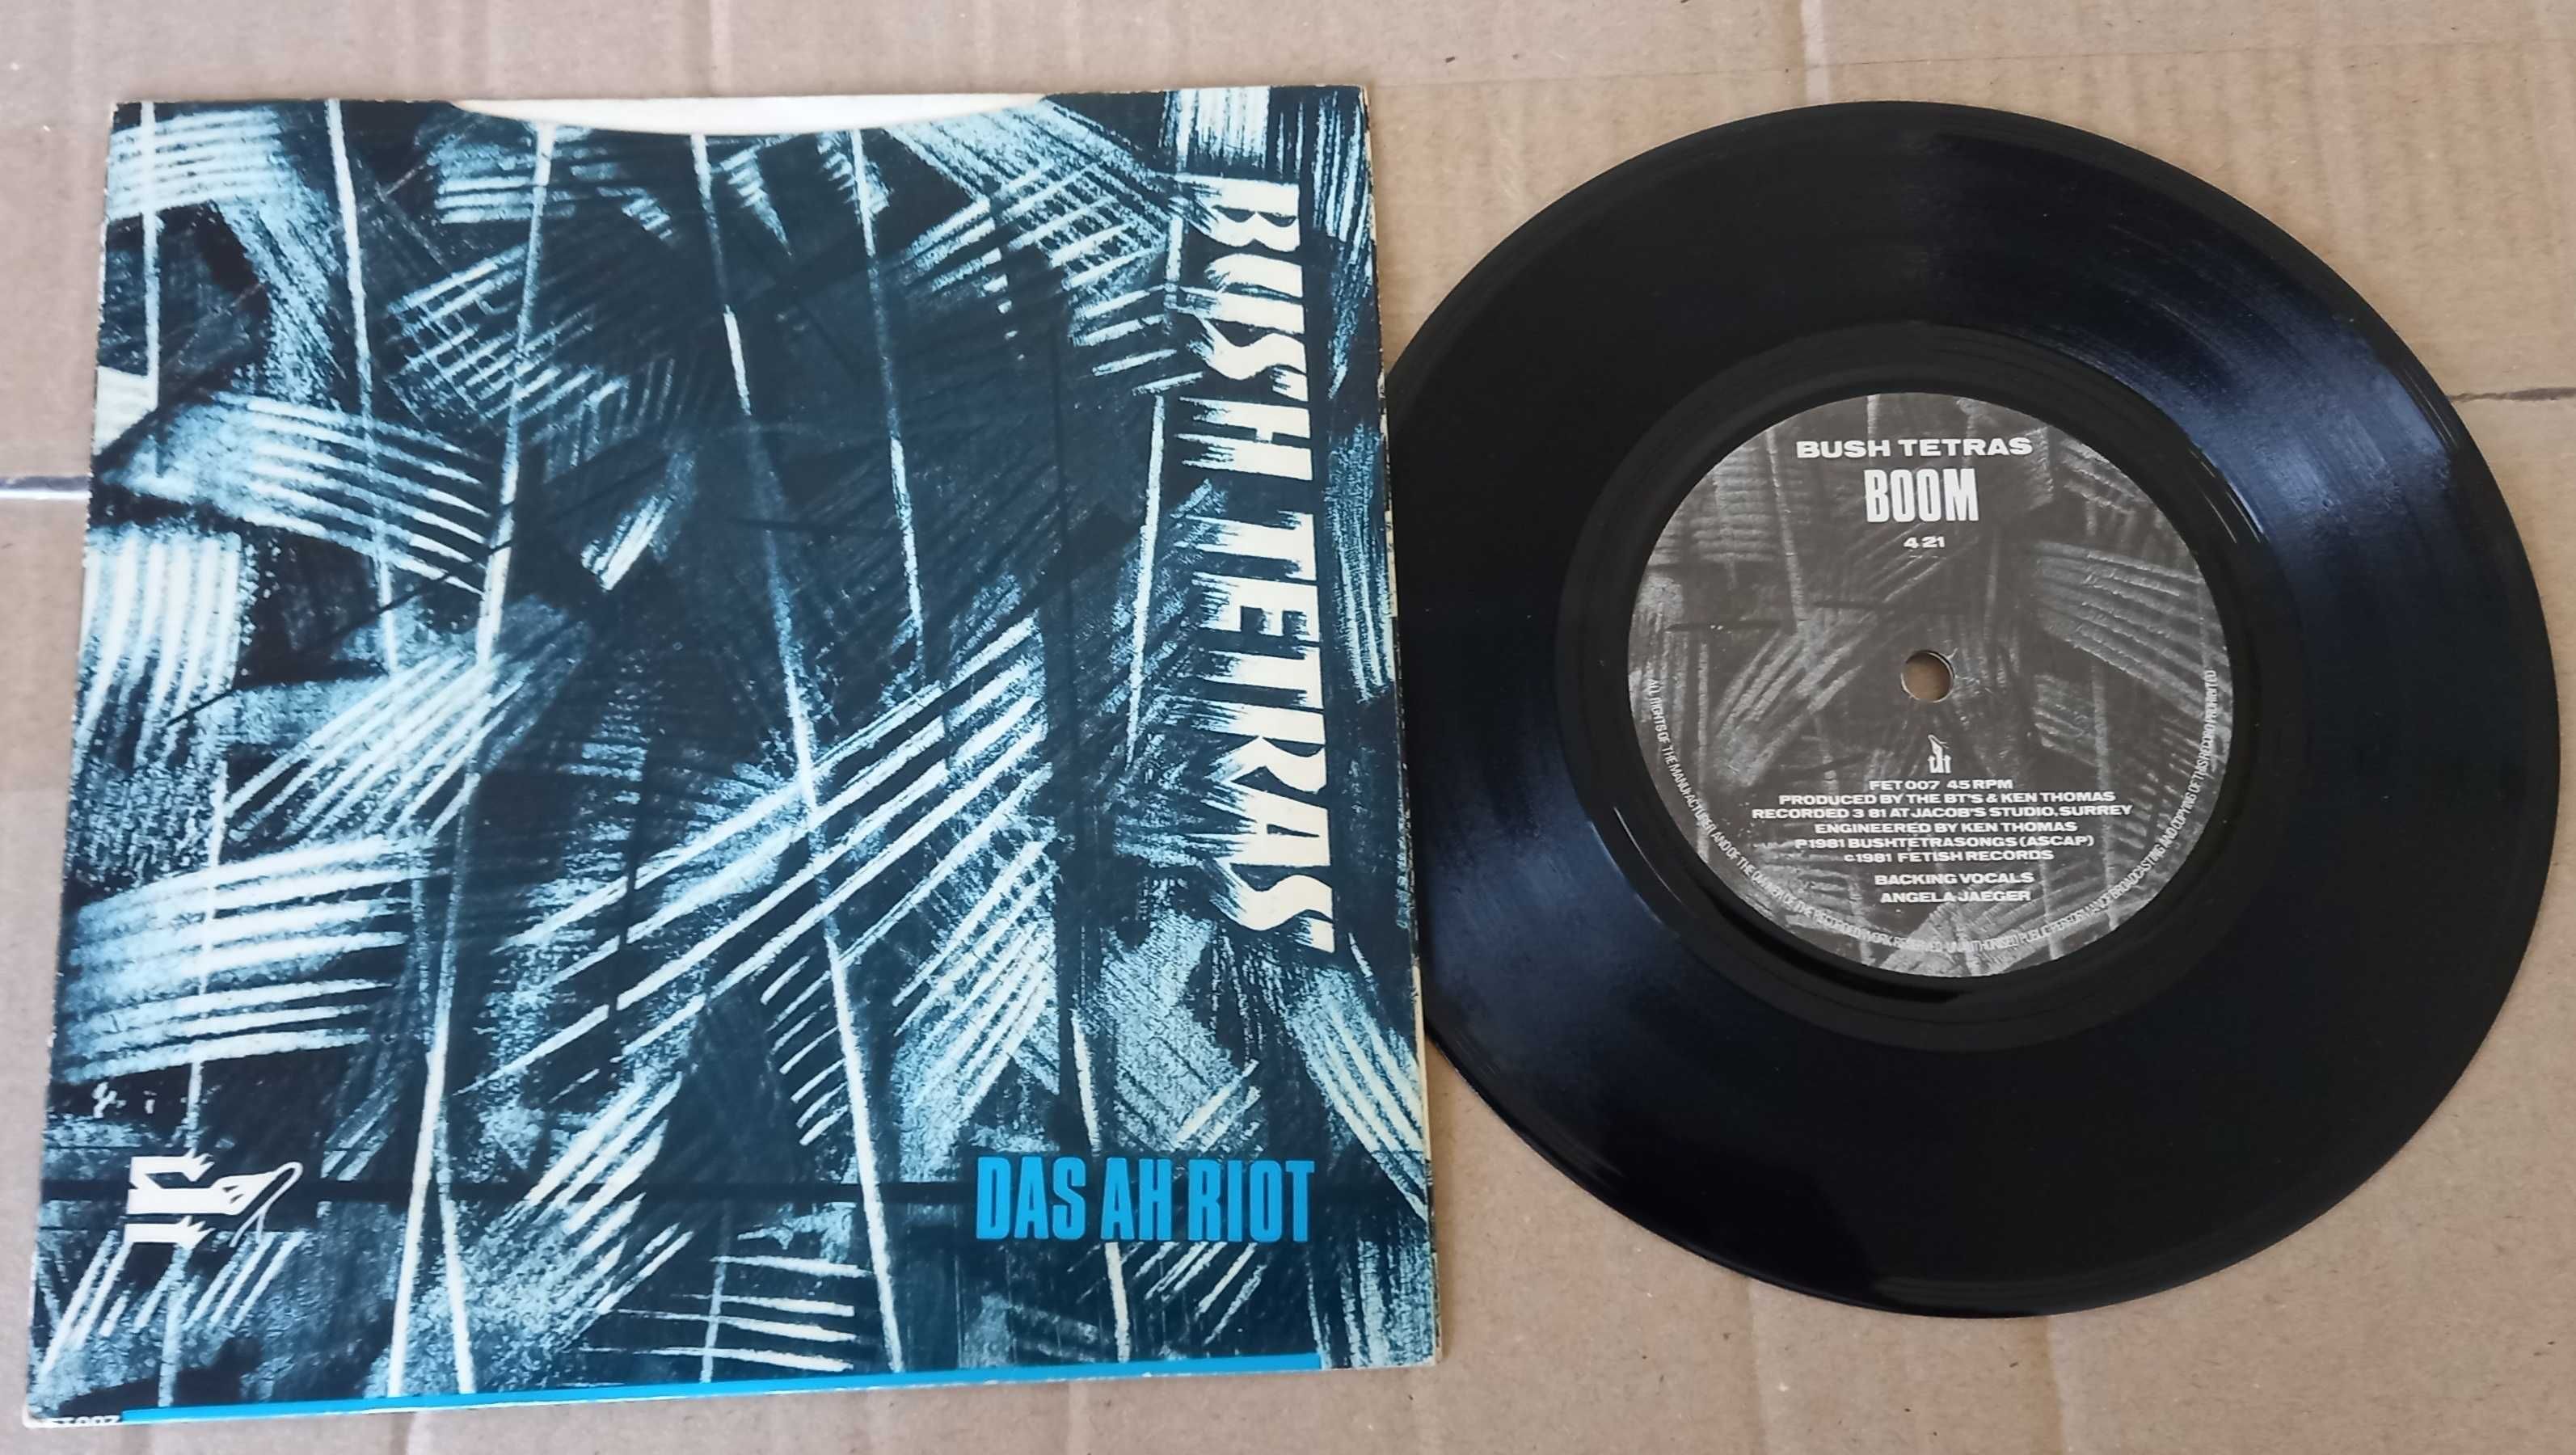 Bush Tetras ‎– Things Go Boom Single 7" Raro 1981 No Wave New York